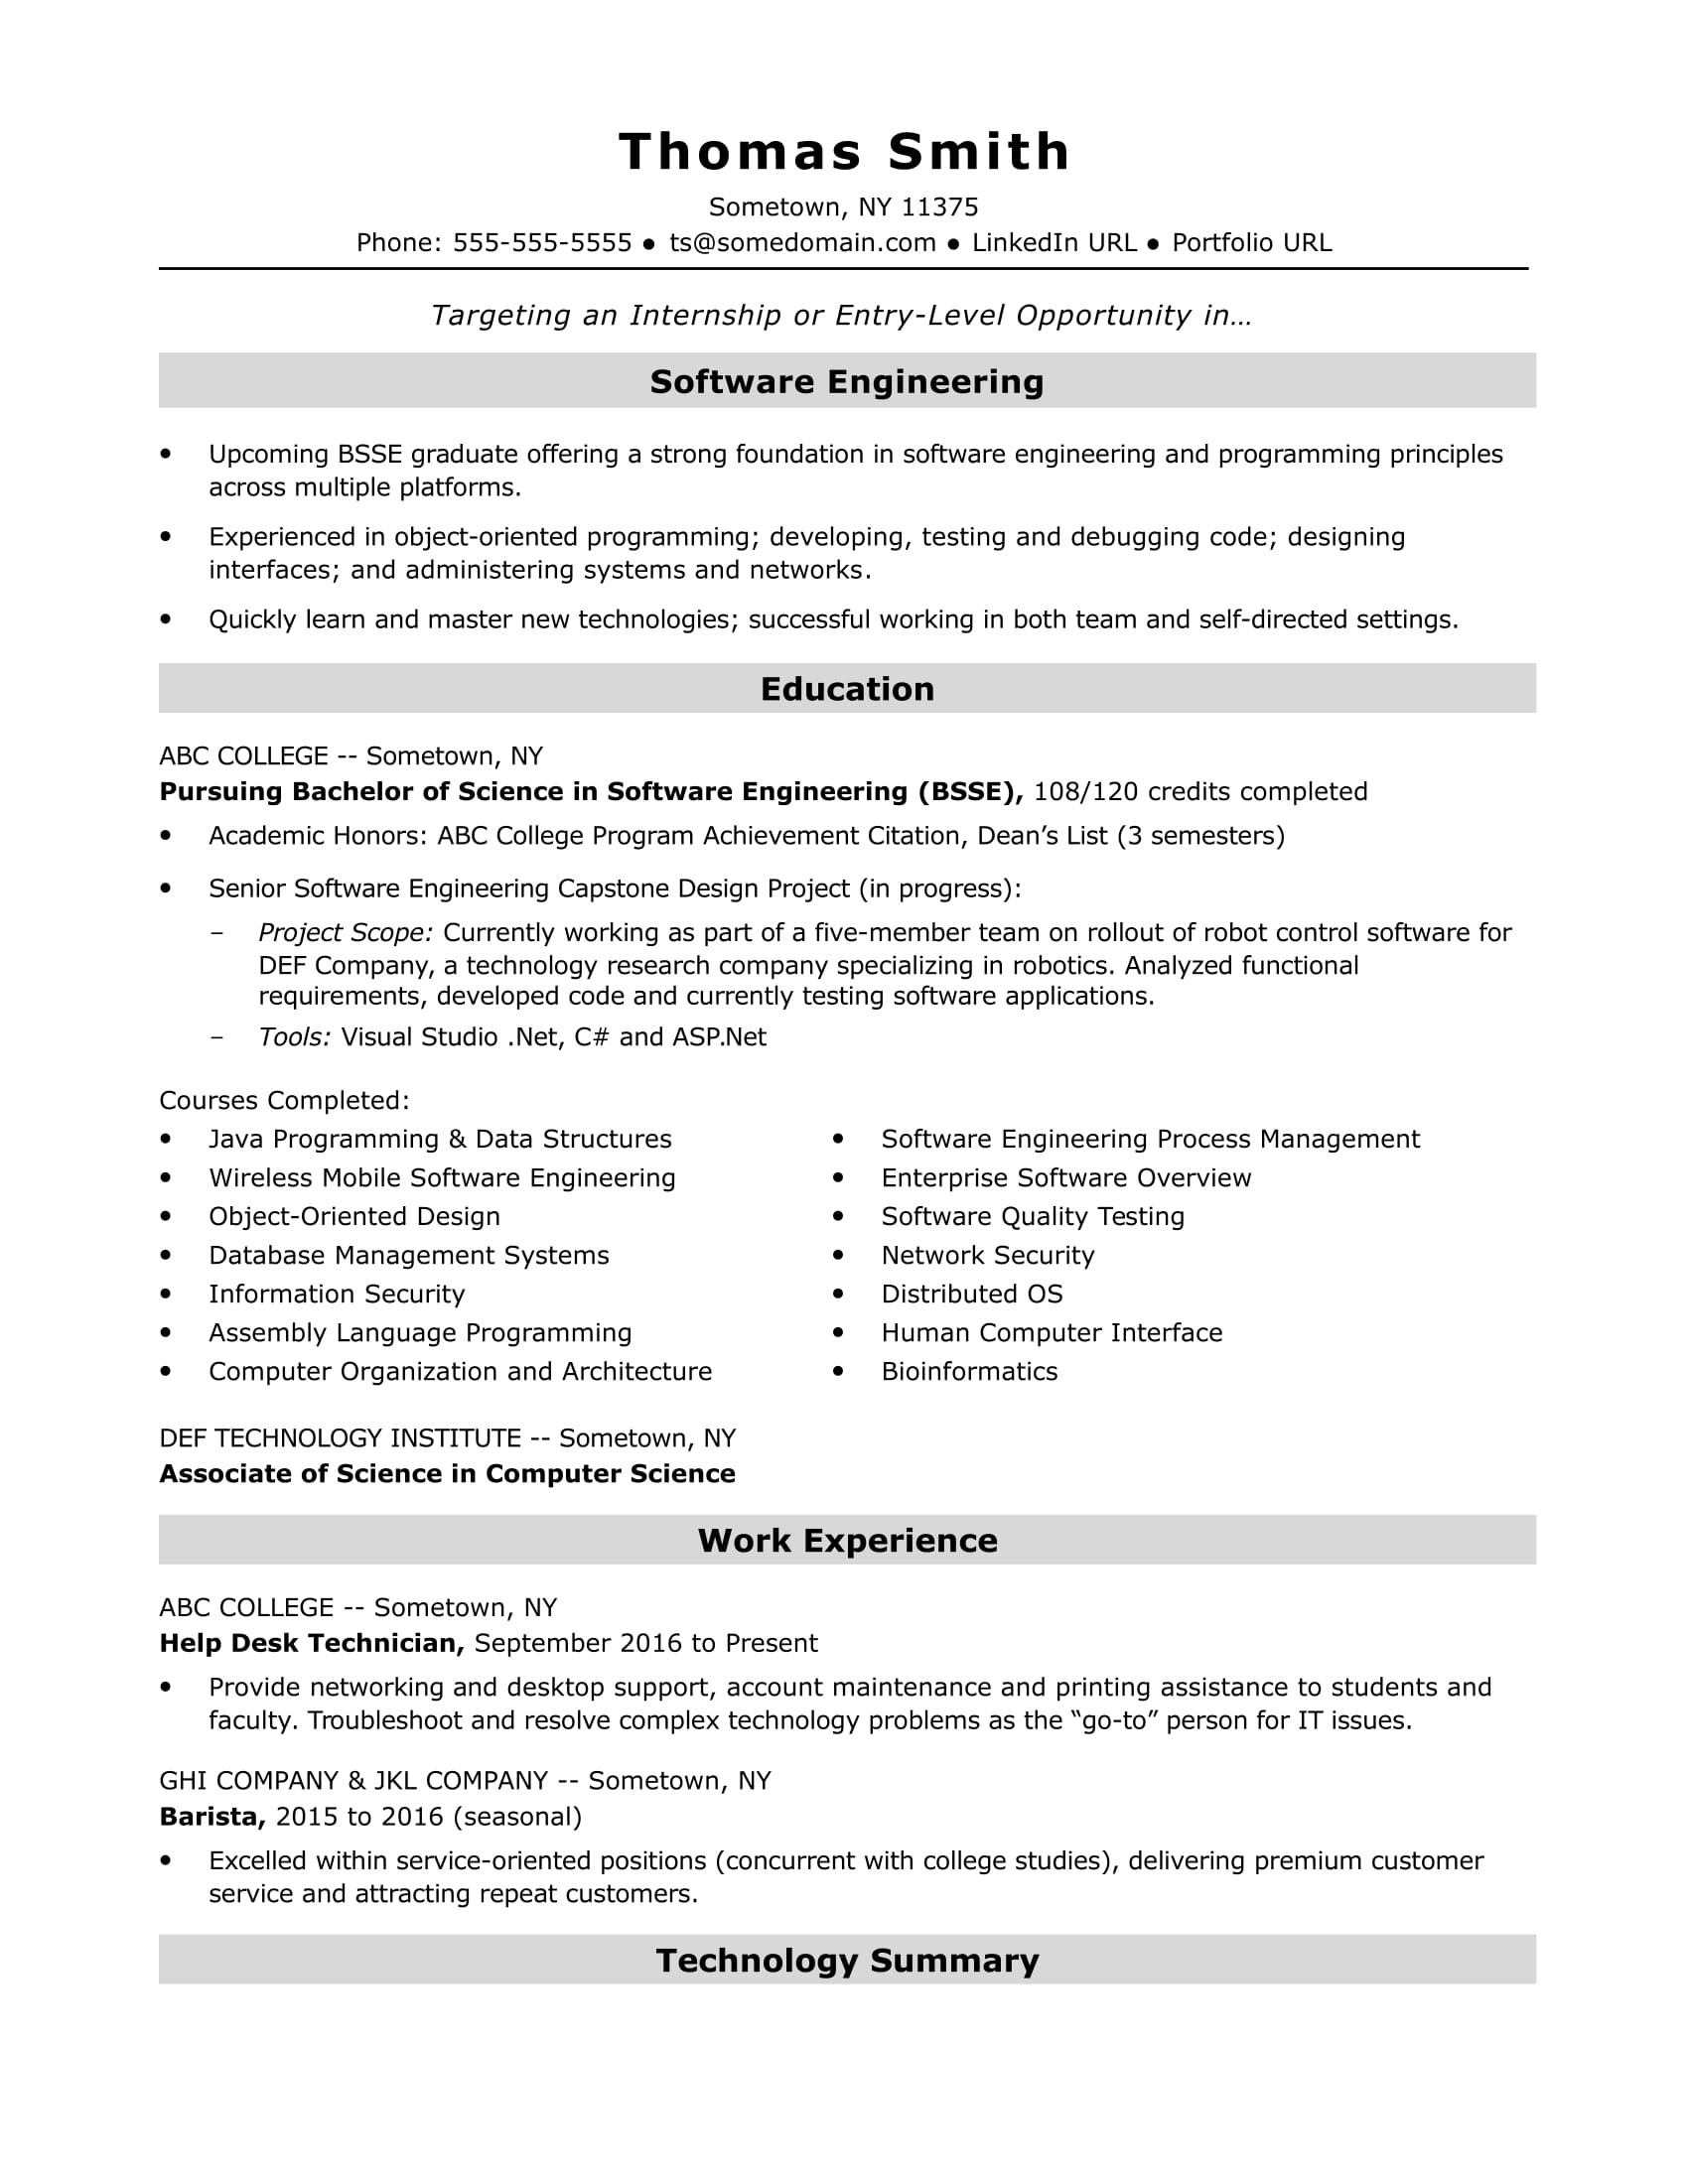 Sample Resume for Entry Level software Positions Entry-level software Engineer Resume Sample Monster.com